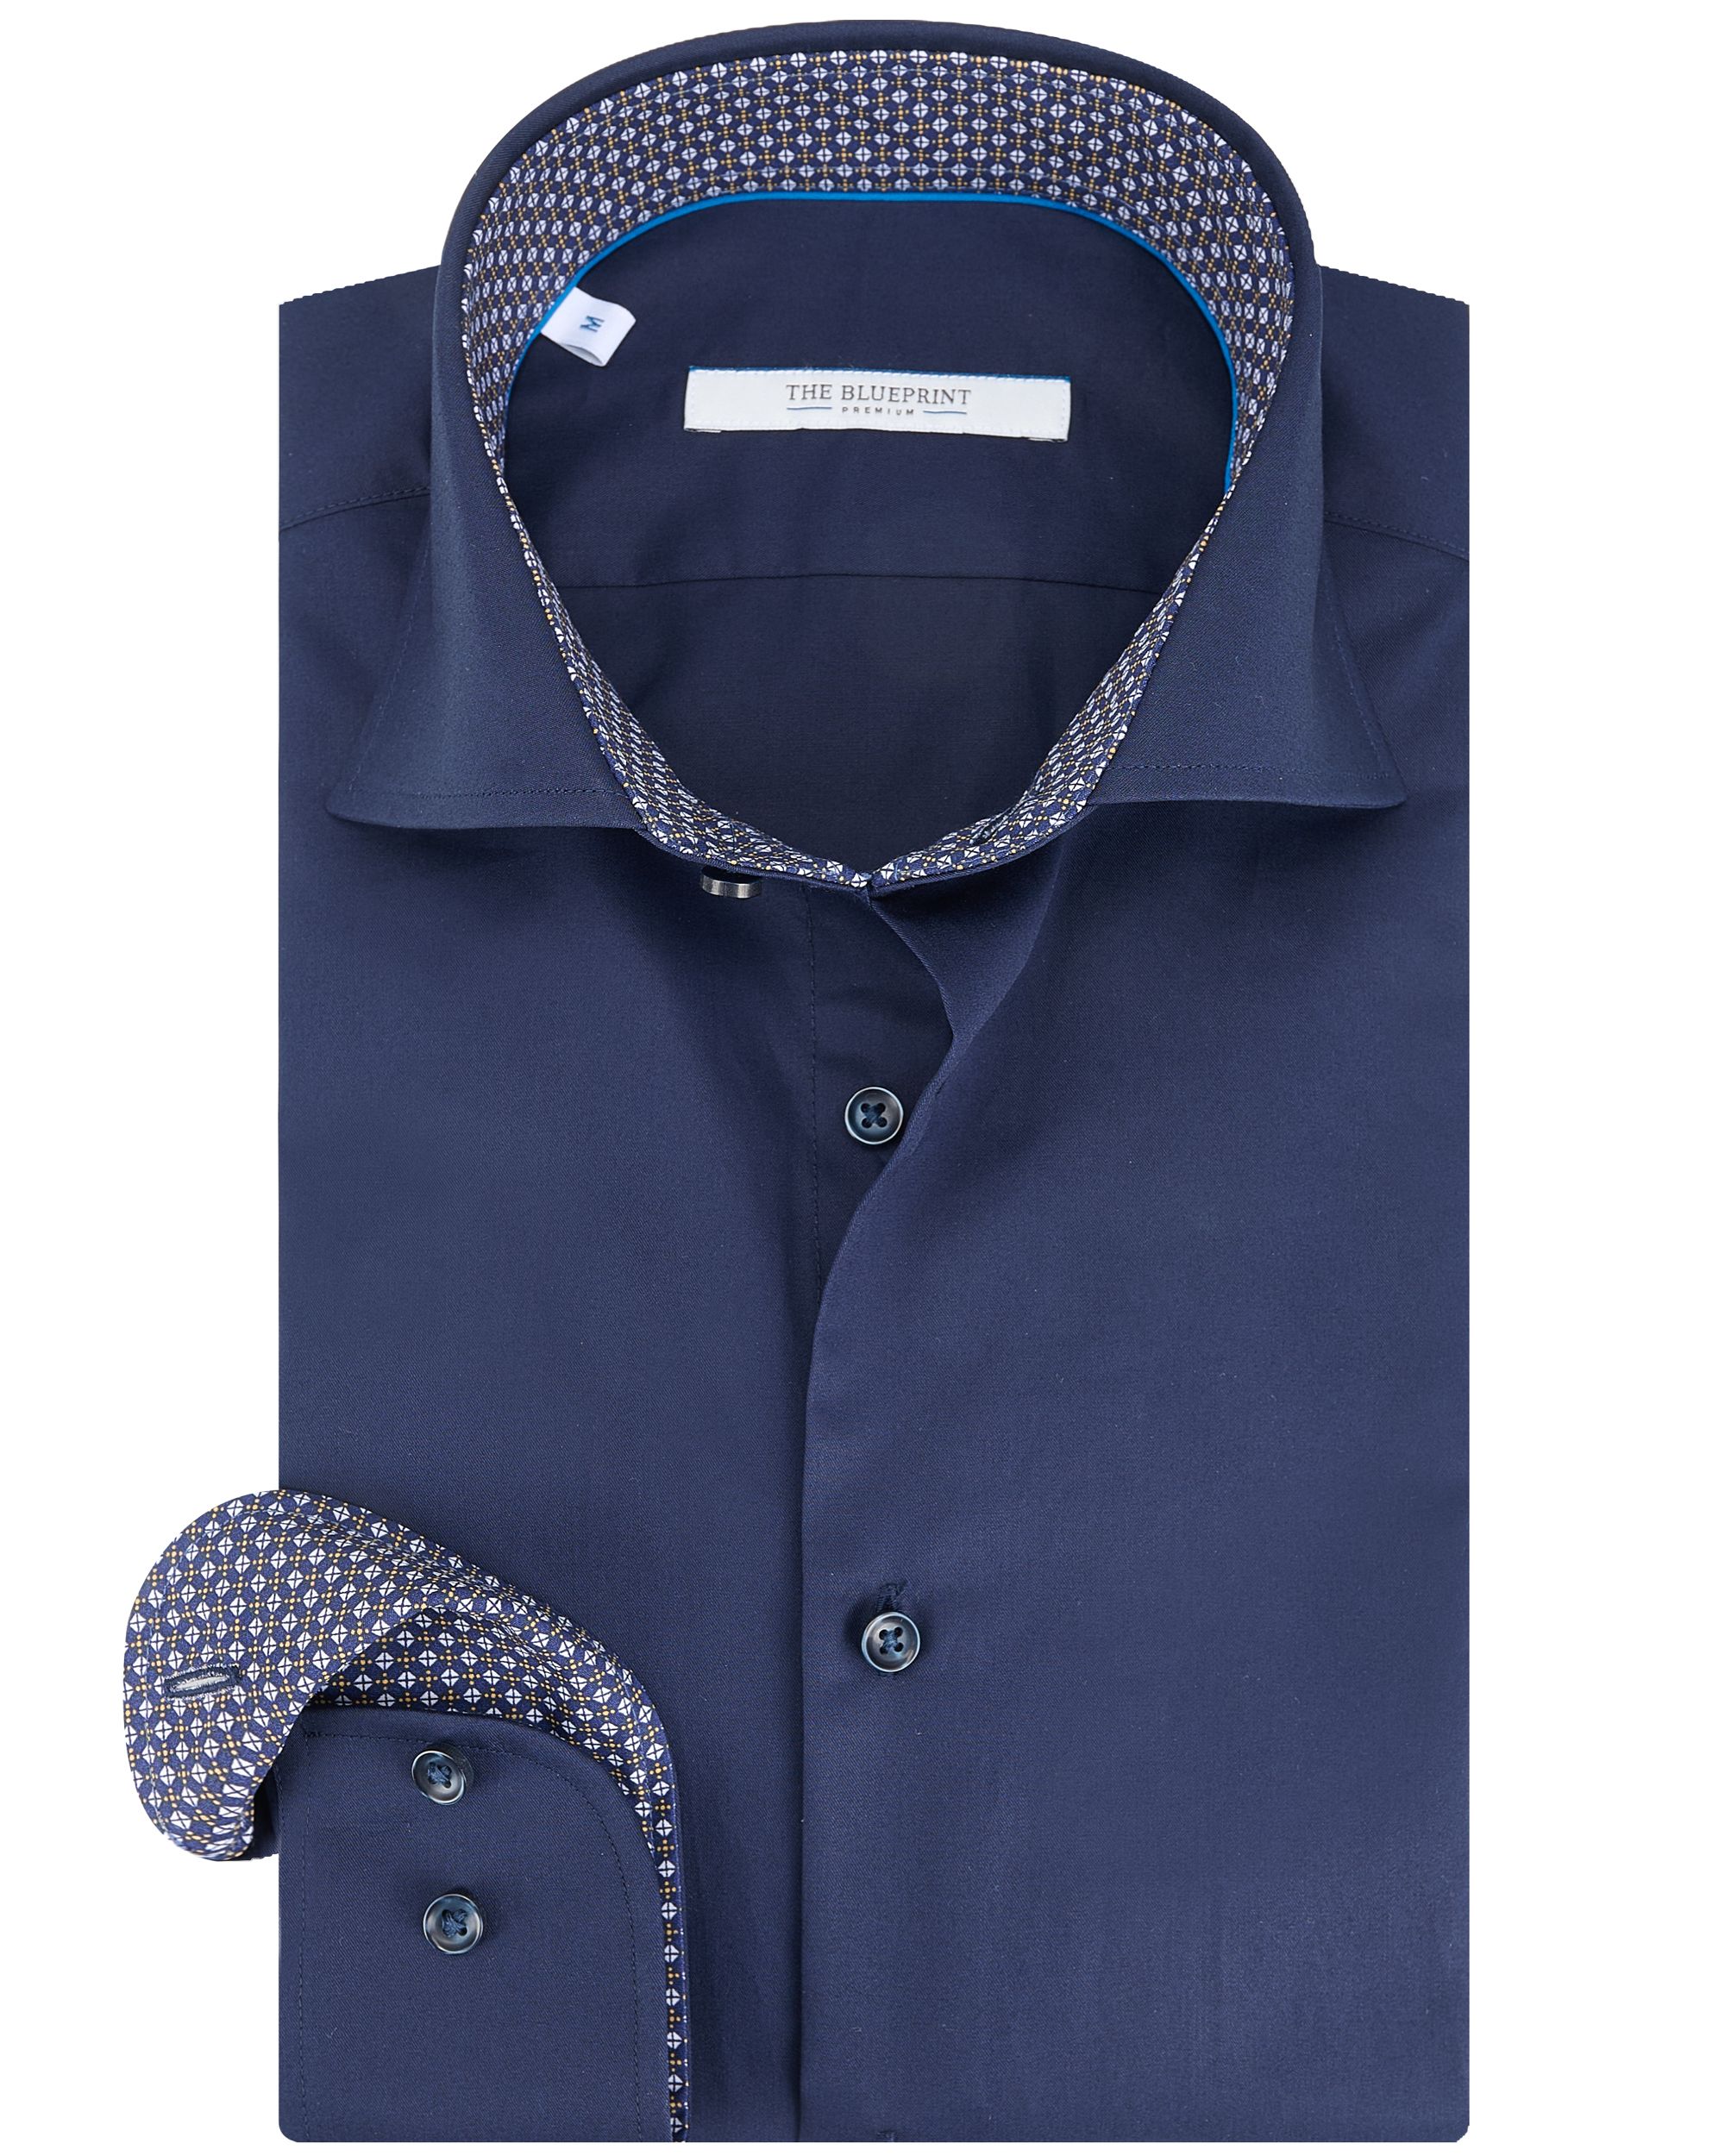 The BLUEPRINT Premium - Trendy Overhemd LM NAVY 092074-001-L